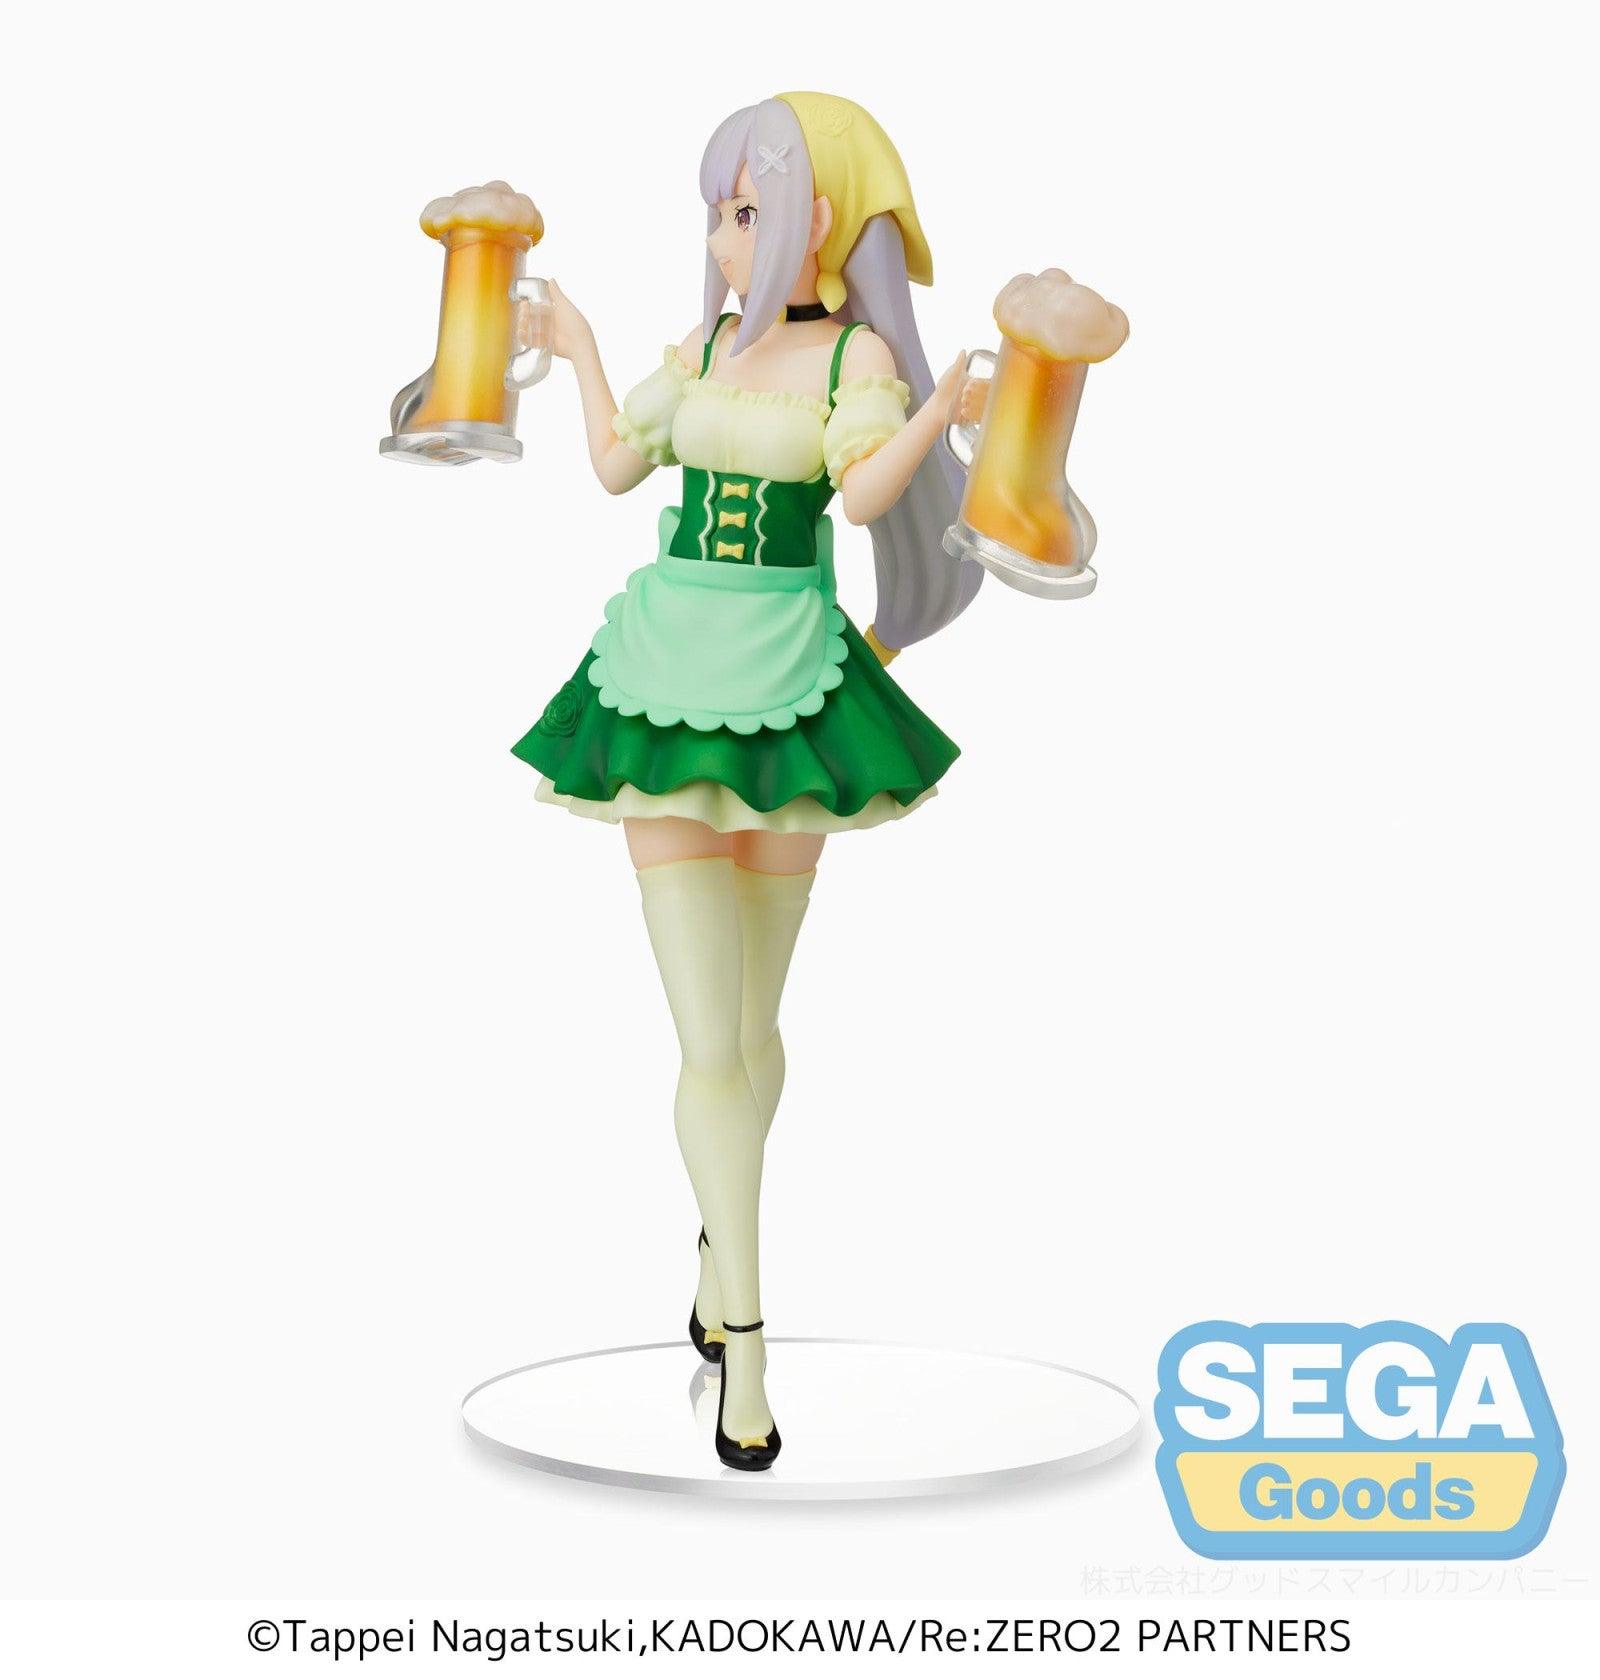 VR-111748 Re:ZERO Starting Life in Another World SPM Figure Emilia Oktoberfest Version (re-run) - Sega - Titan Pop Culture